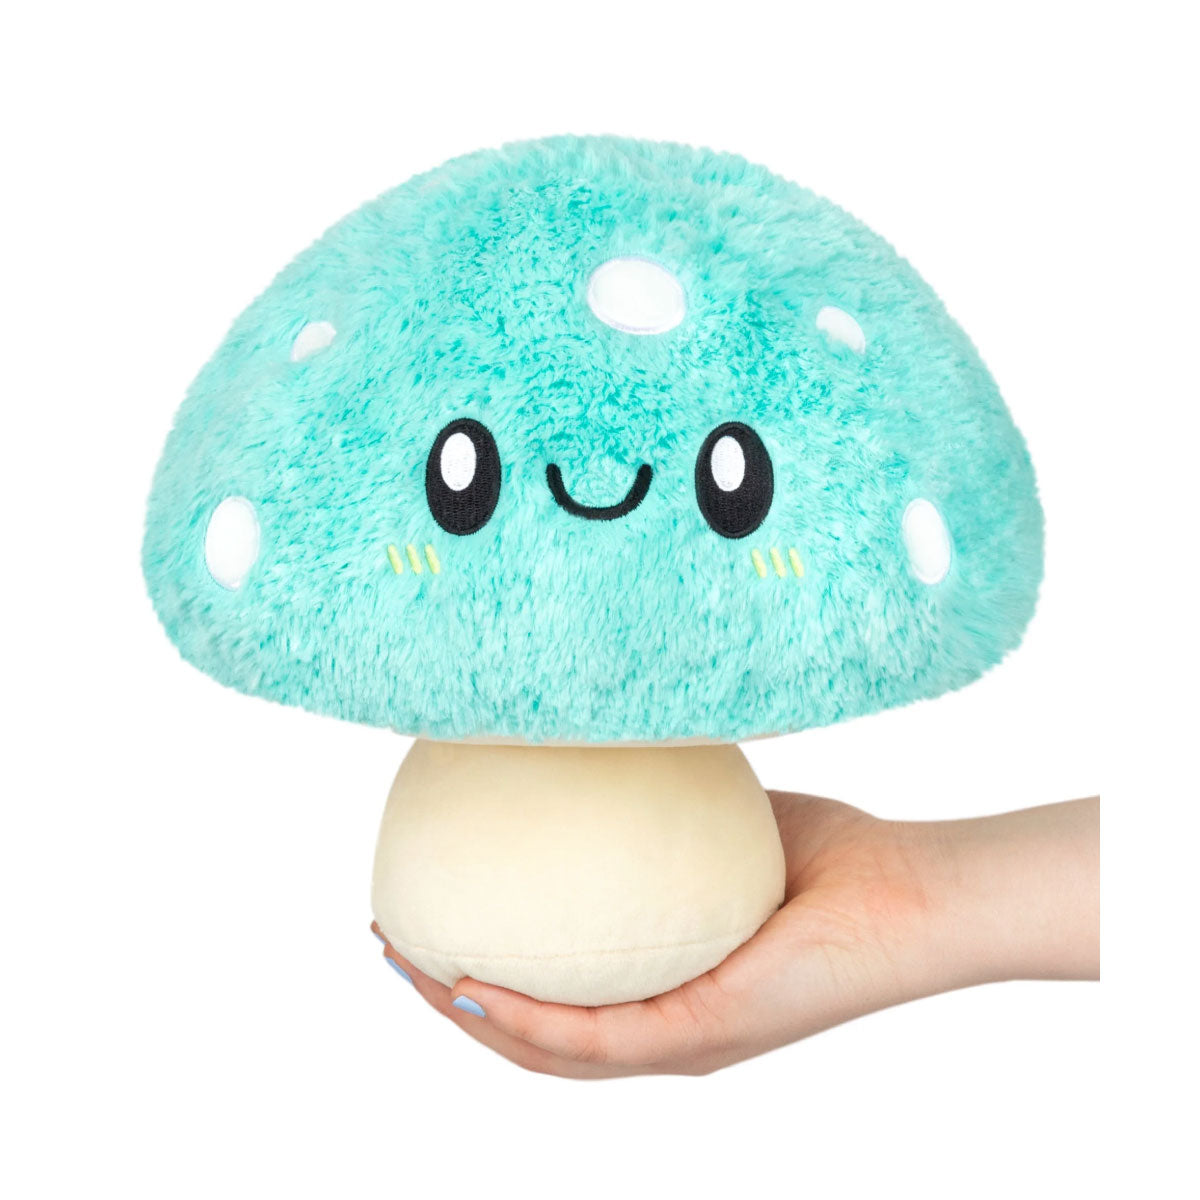 Squishable Turquoise Mini Mushroom 7”